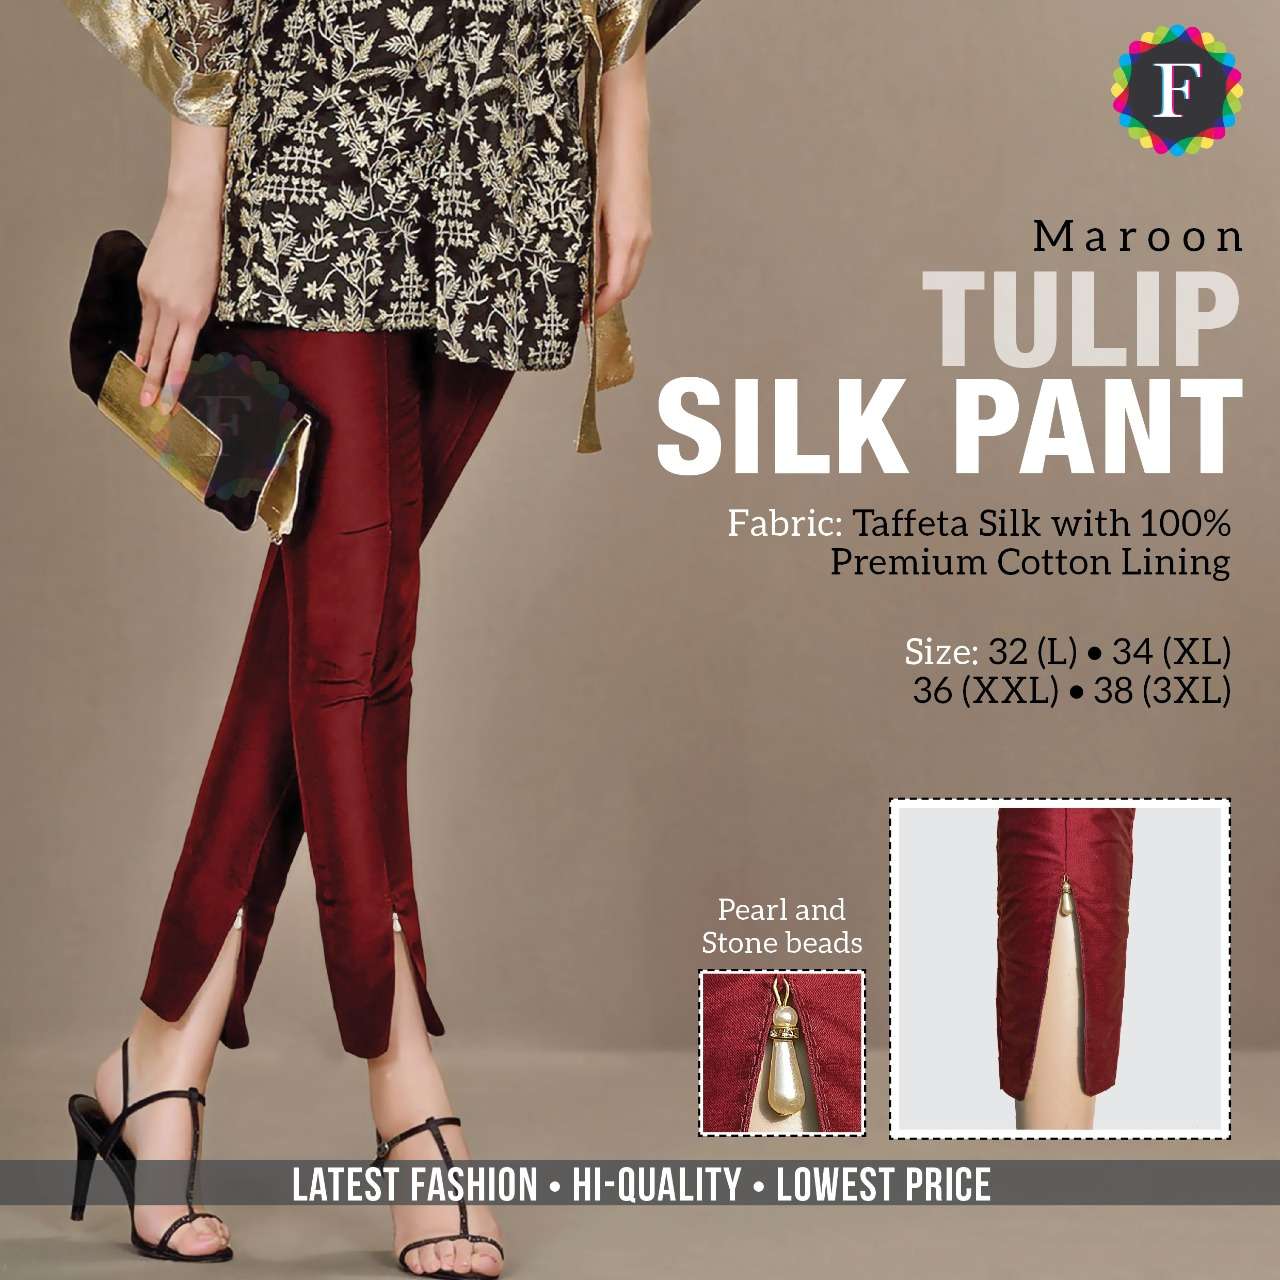 tulip silk pant taffeta silk bottom wear pant collection wholesale 